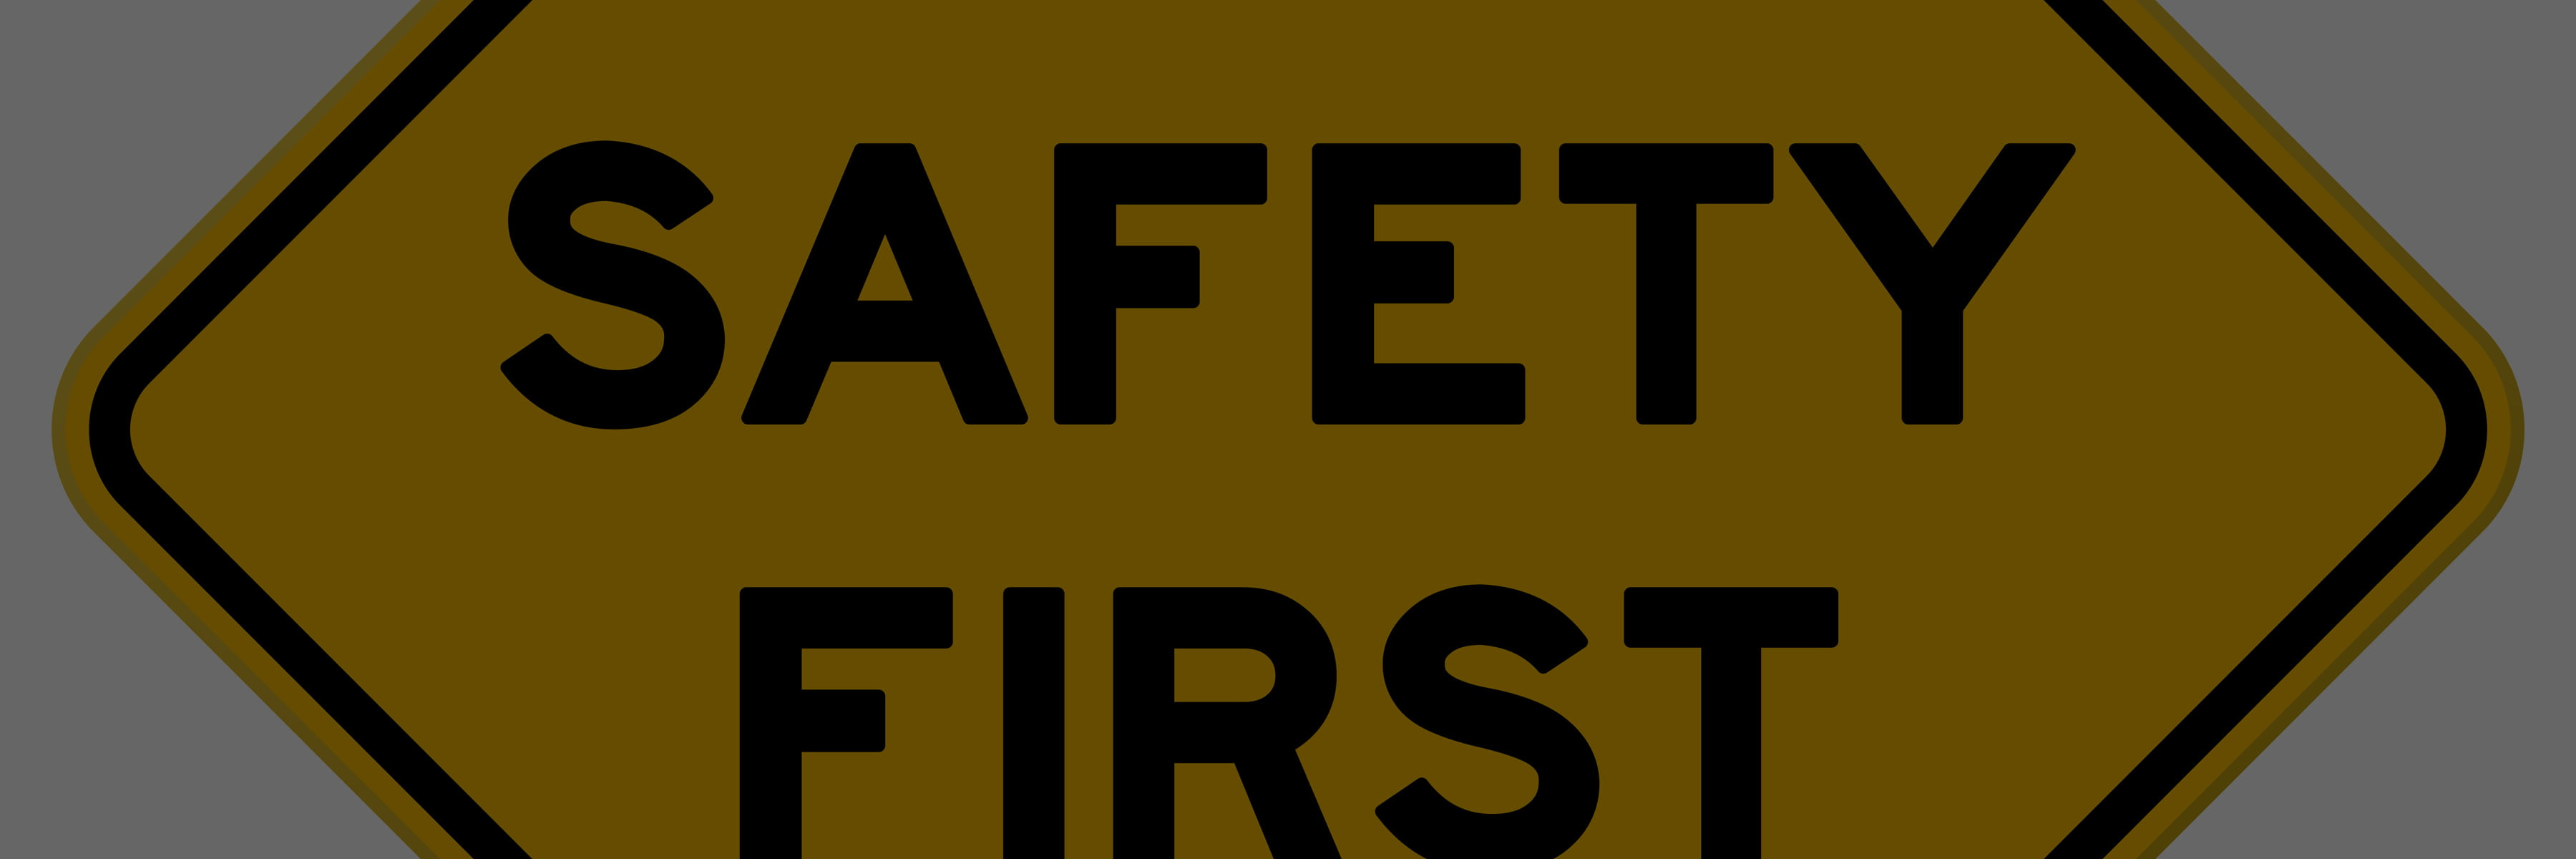 naem-webinar-2015-safety-culture-re-invigoration-1800x600-min